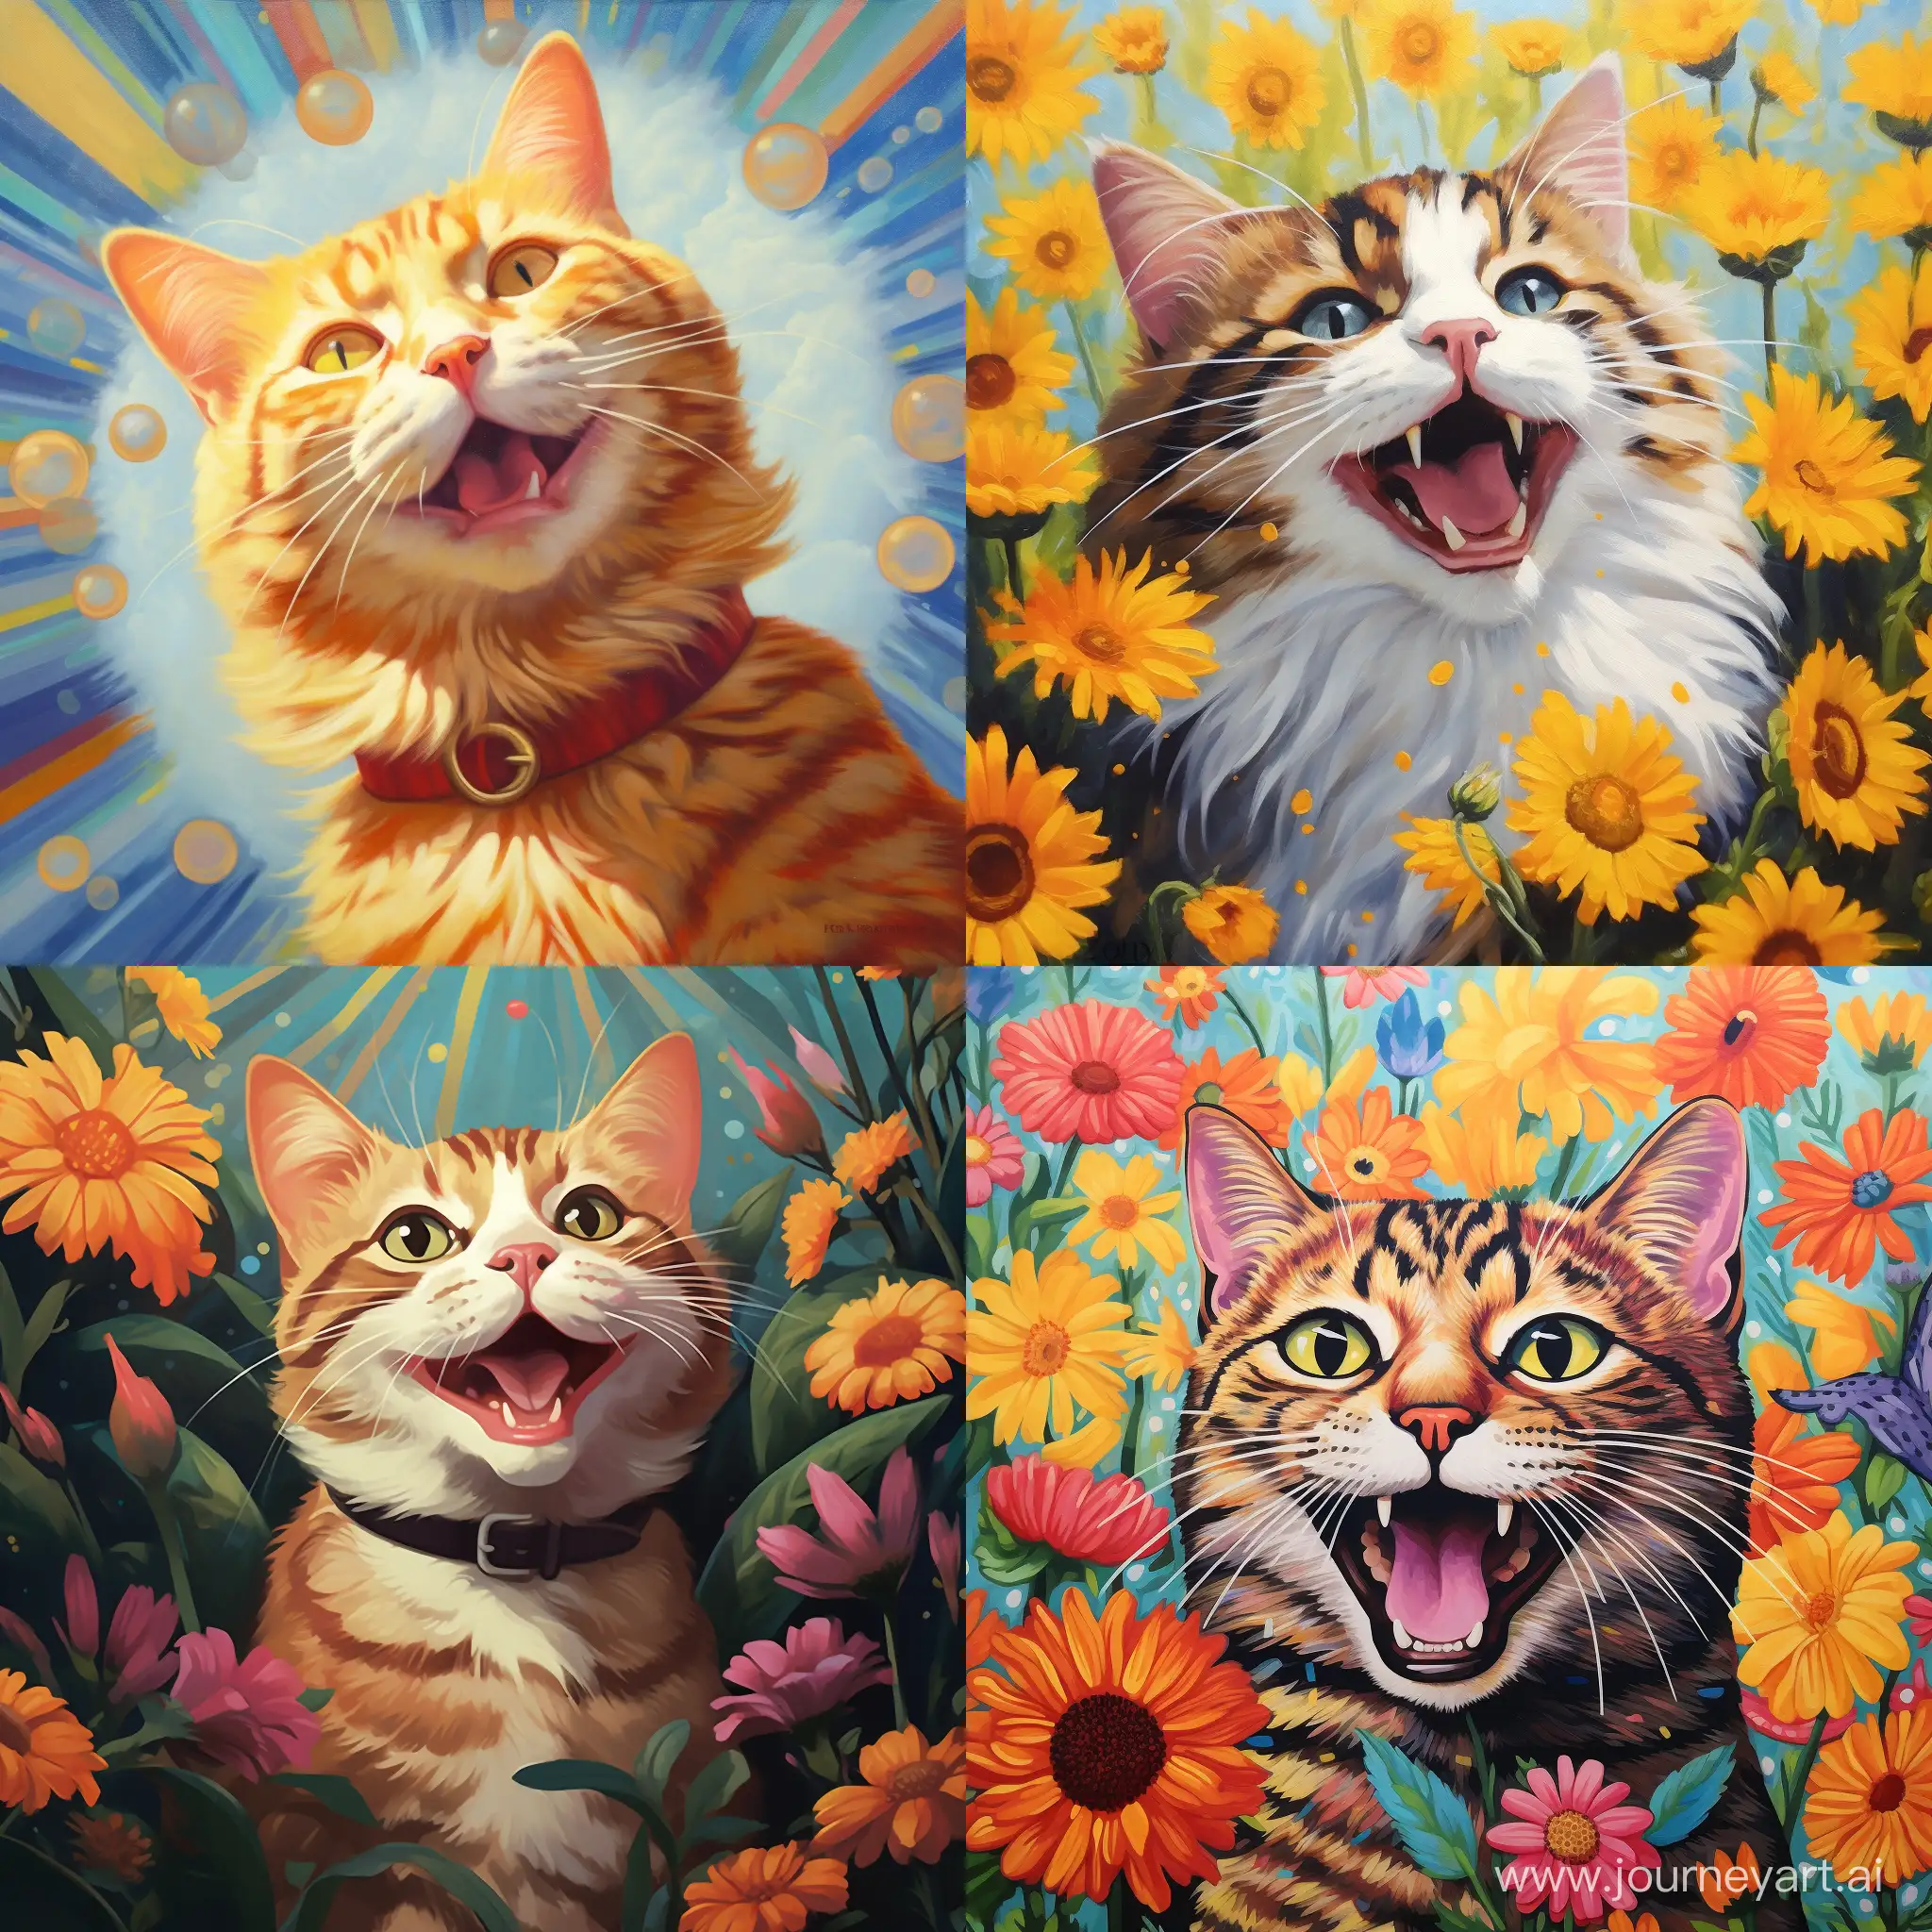 Cheerful-Cat-Art-Playful-Feline-Delights-in-Vibrant-Display